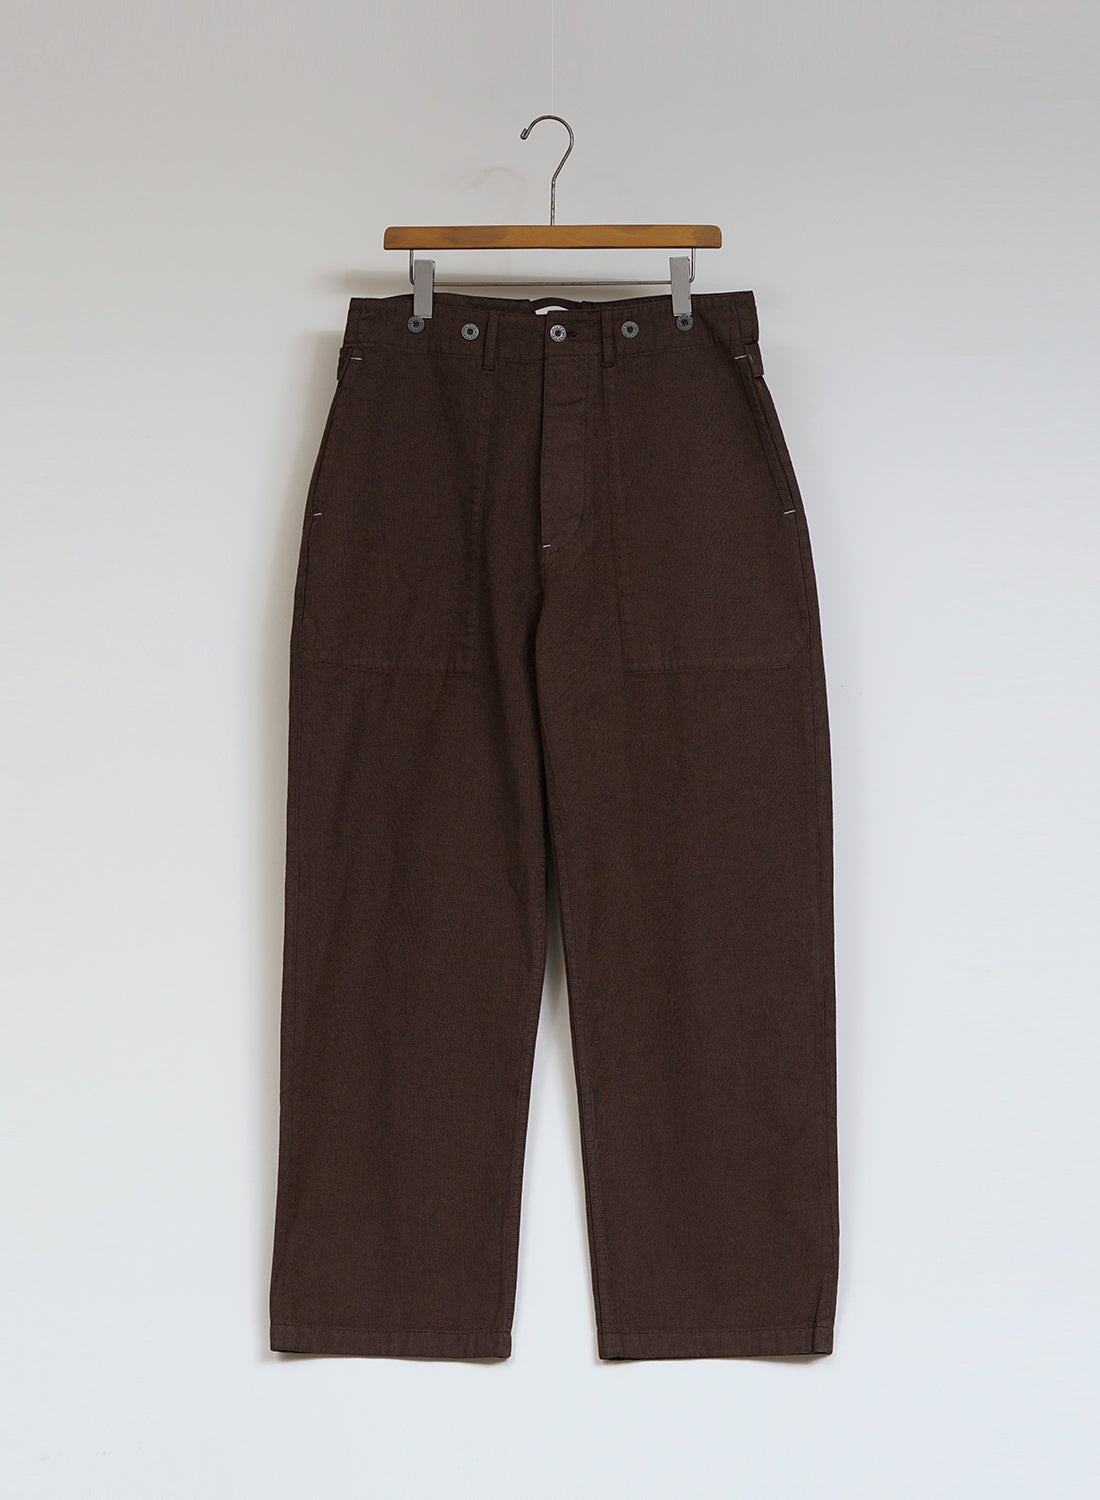 New Workwear Pant Broken Twill in Brown - 1